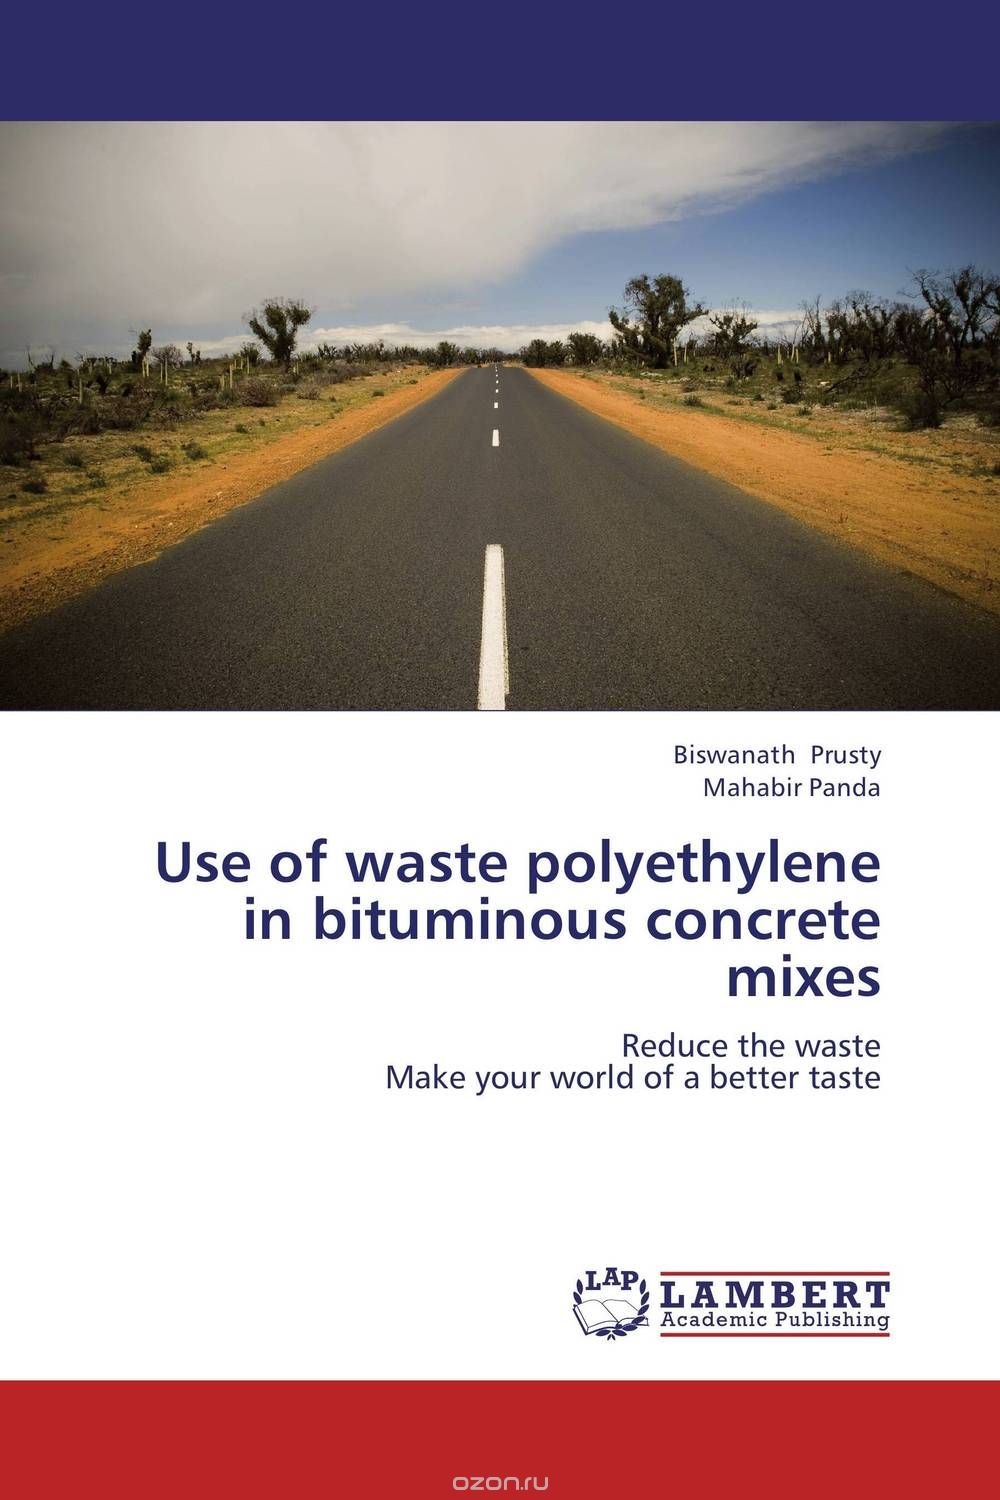 Скачать книгу "Use of waste polyethylene in bituminous concrete mixes"